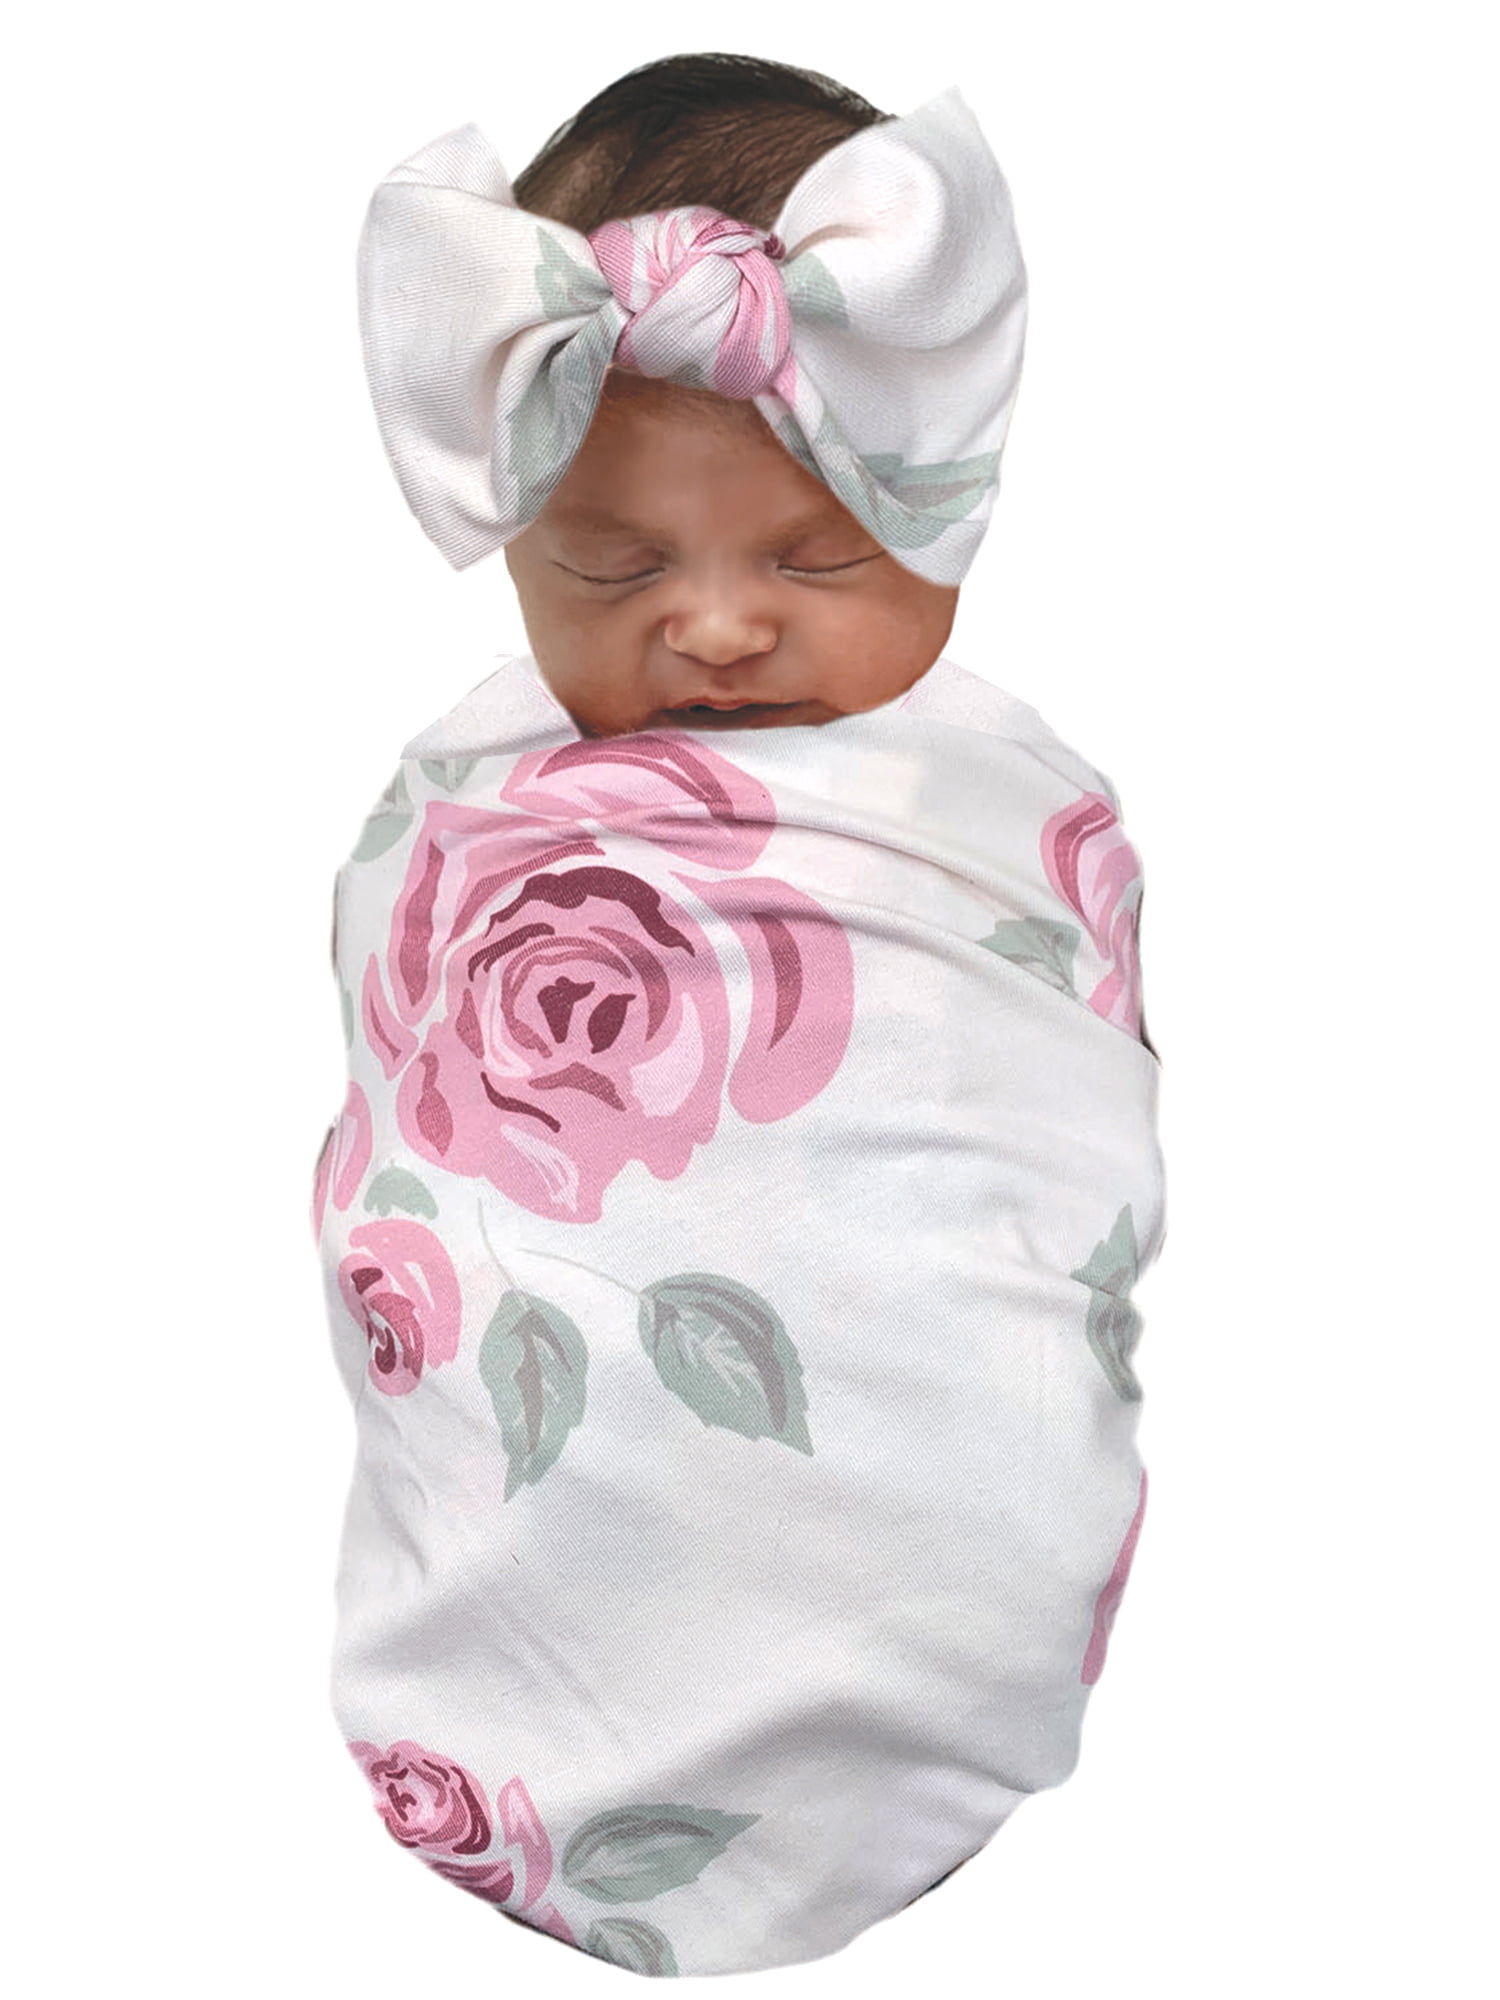 Off White Cream Light Blue  Headband Flowers headband  ;  Newborn Baby Girl  Headband